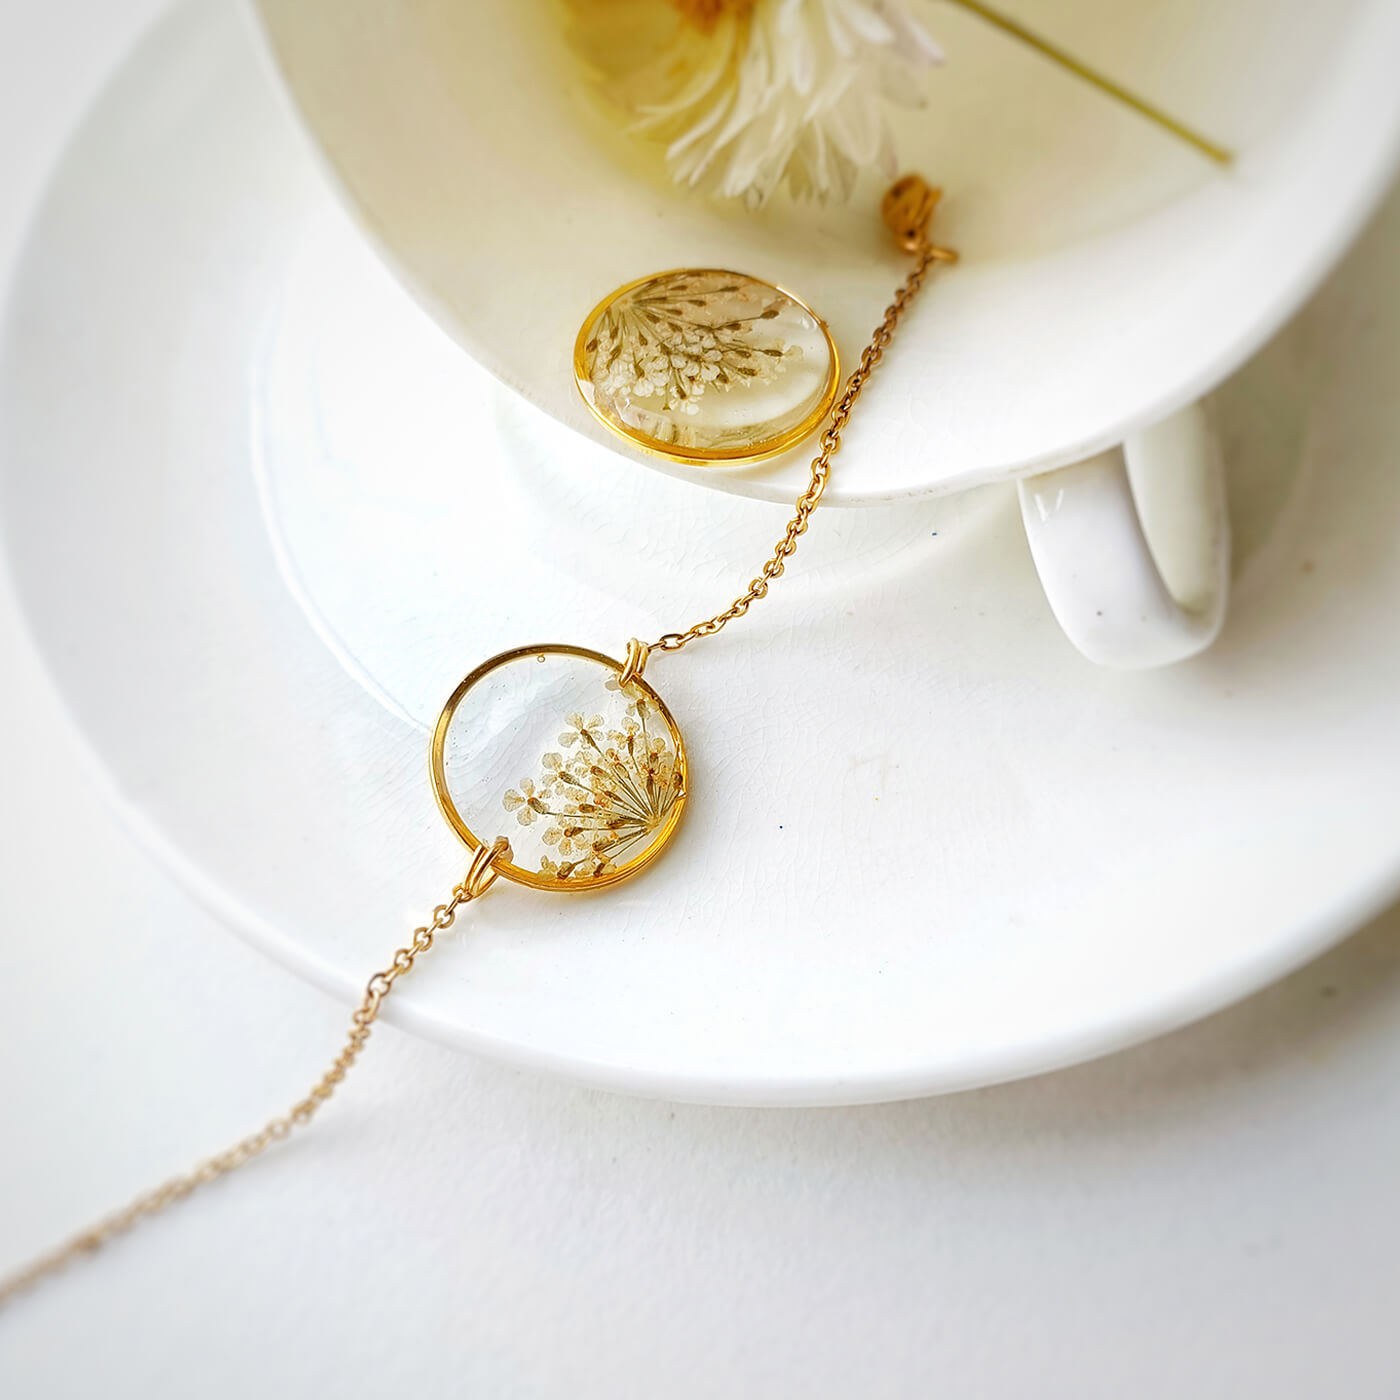 Buy Bouquet Earrings, Sterling Silver / Gold Plated Wire, Flower Earrings,  Gift for Her, Romantic Earrings Online in India - Etsy